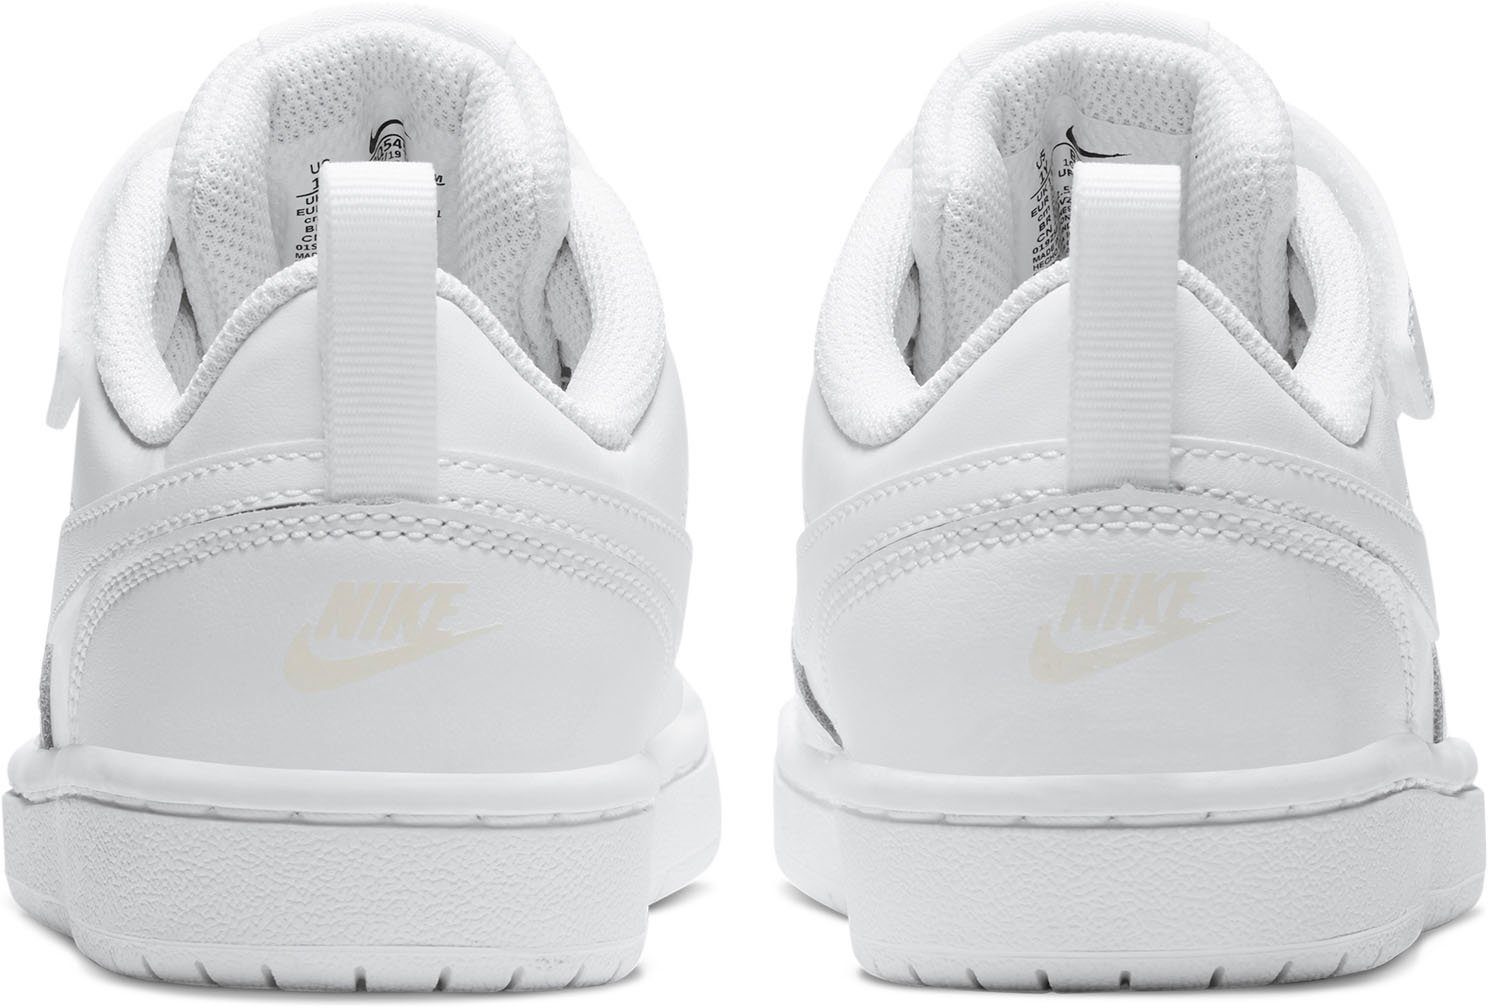 Sneaker Design Spuren 1 BOROUGH Nike COURT Air auf 2 den LOW des Sportswear Force